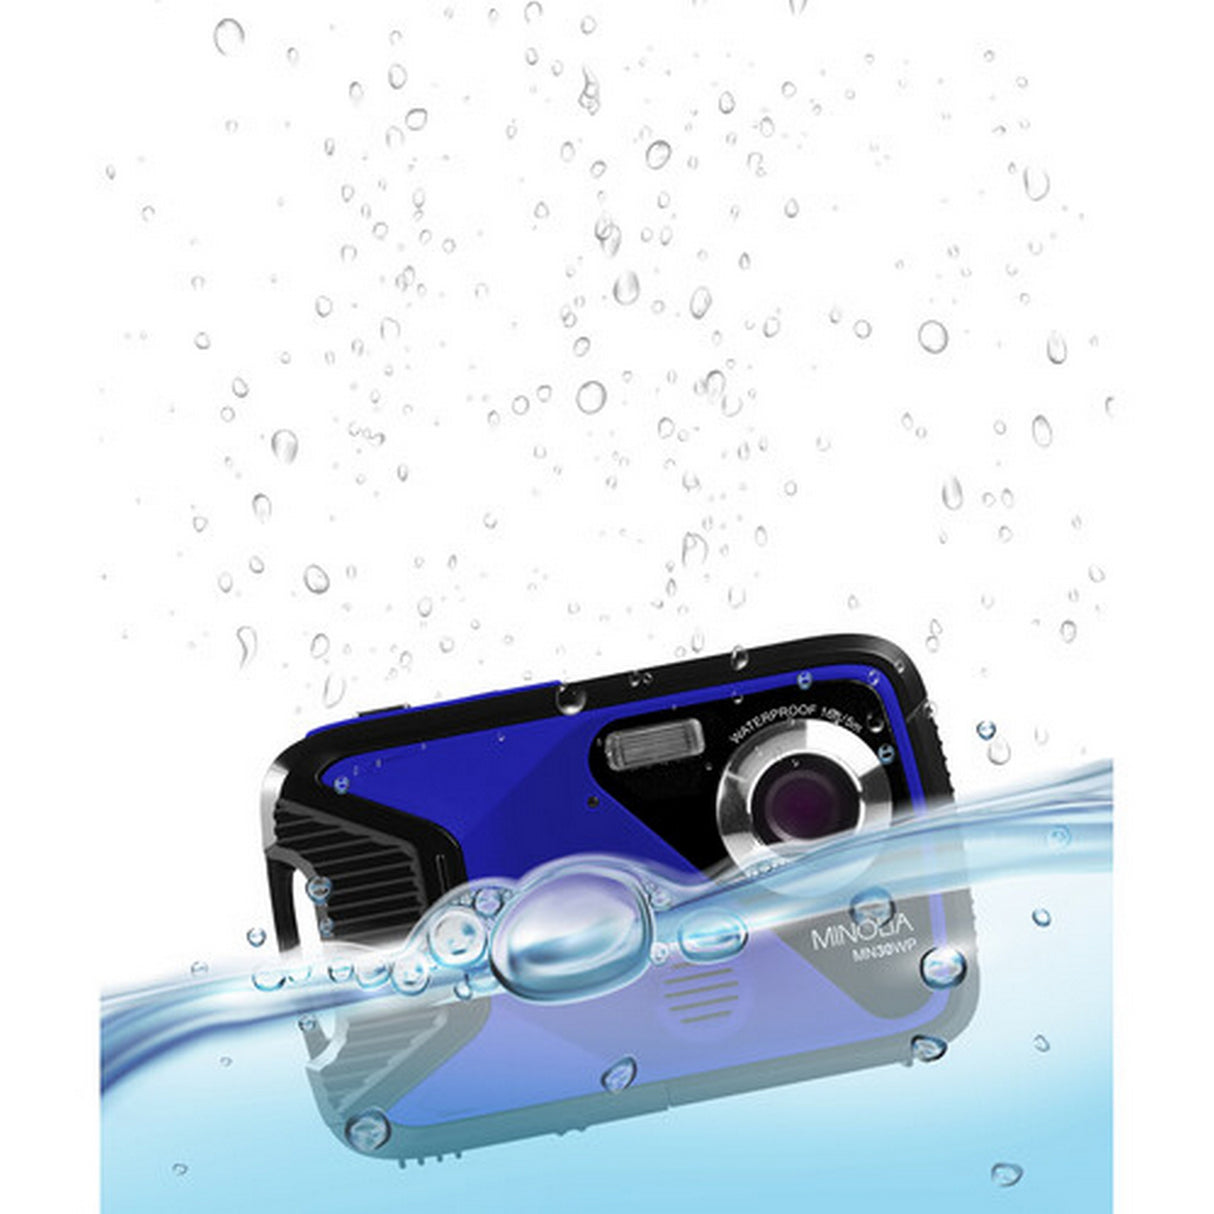 Minolta MN30WP 21 MP 1080P HD Waterproof Digital Camera, Blue